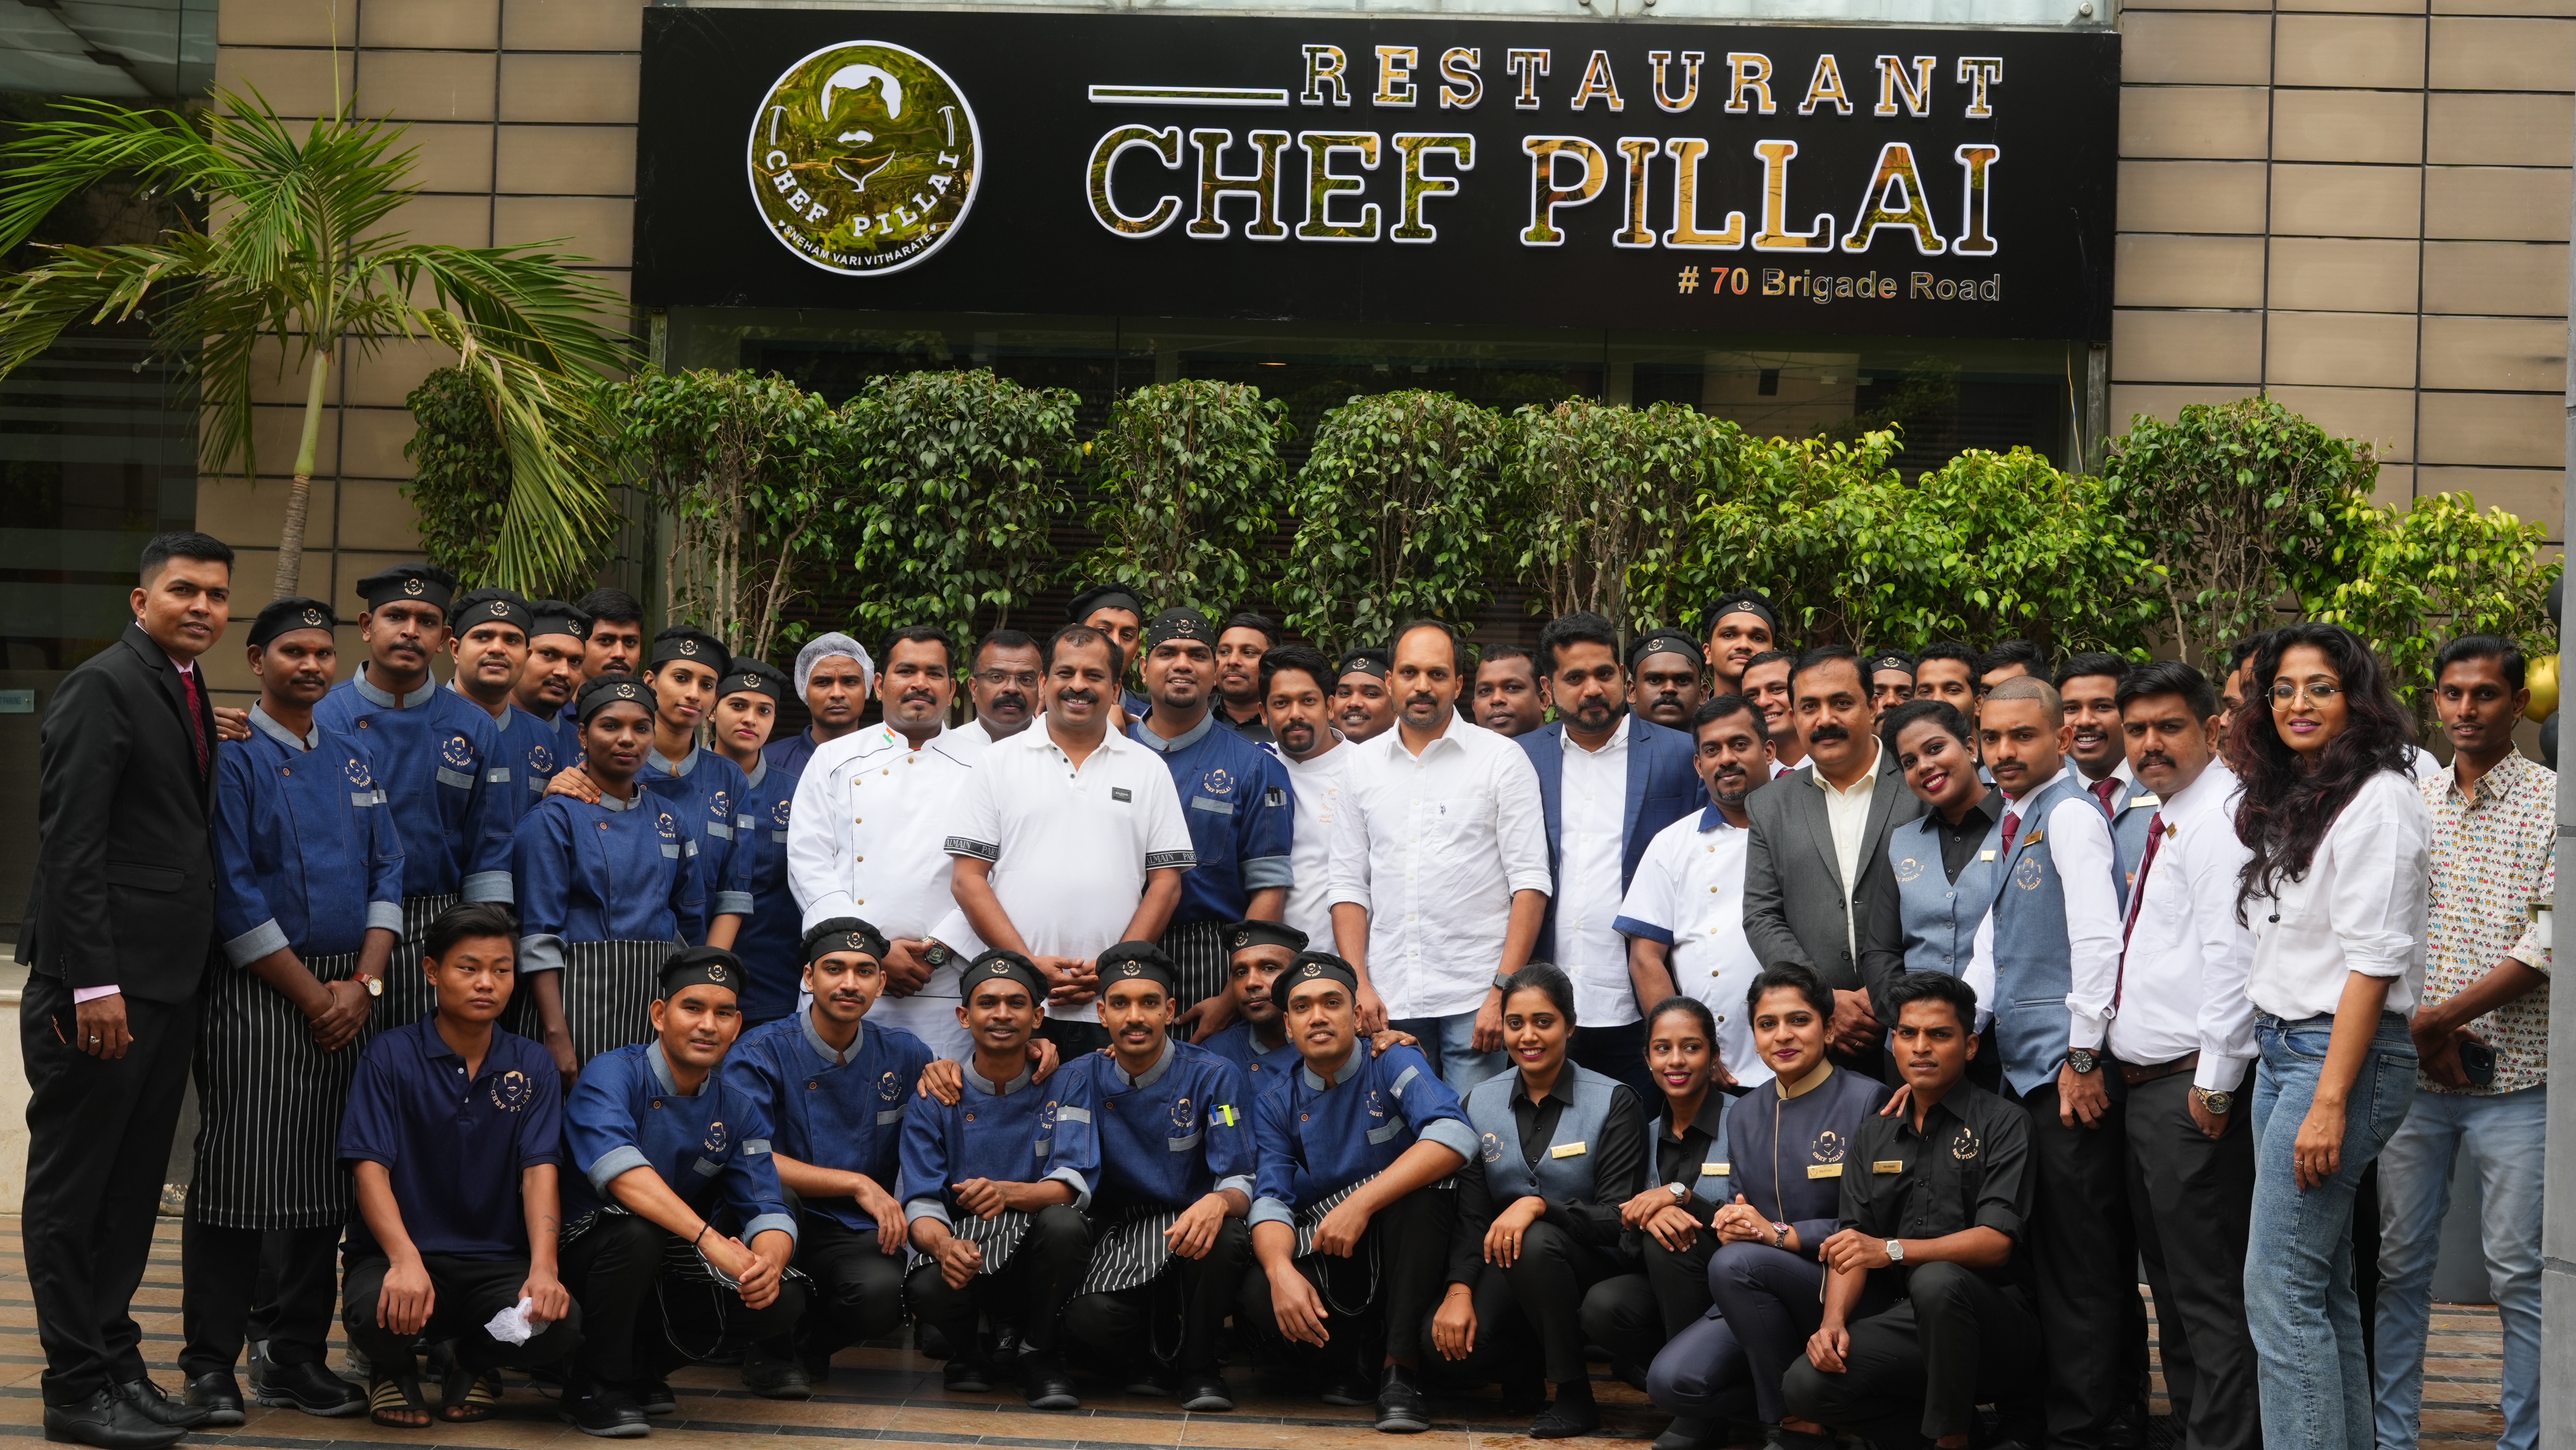 Team RCP, Brigade Road with Chef Pillai